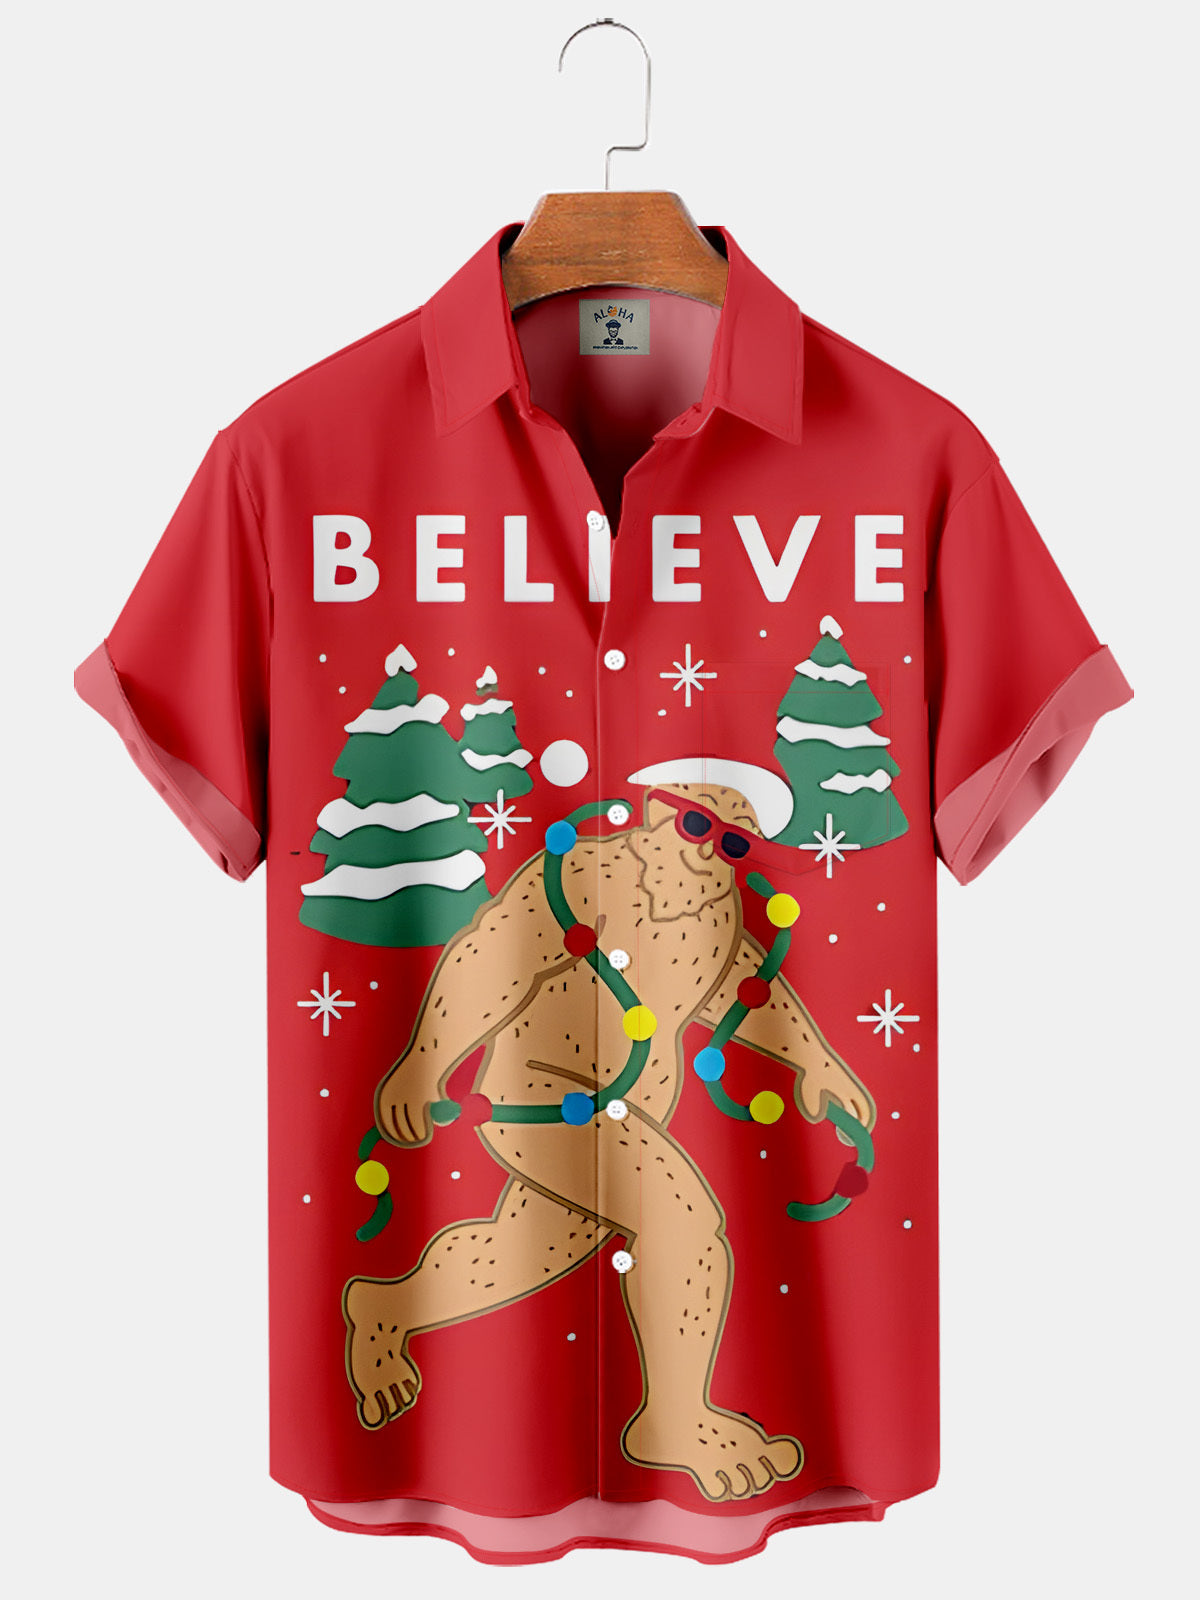 Christmas Spoof Fun Bigfoot Santa Claus - Hawaiian Shirt